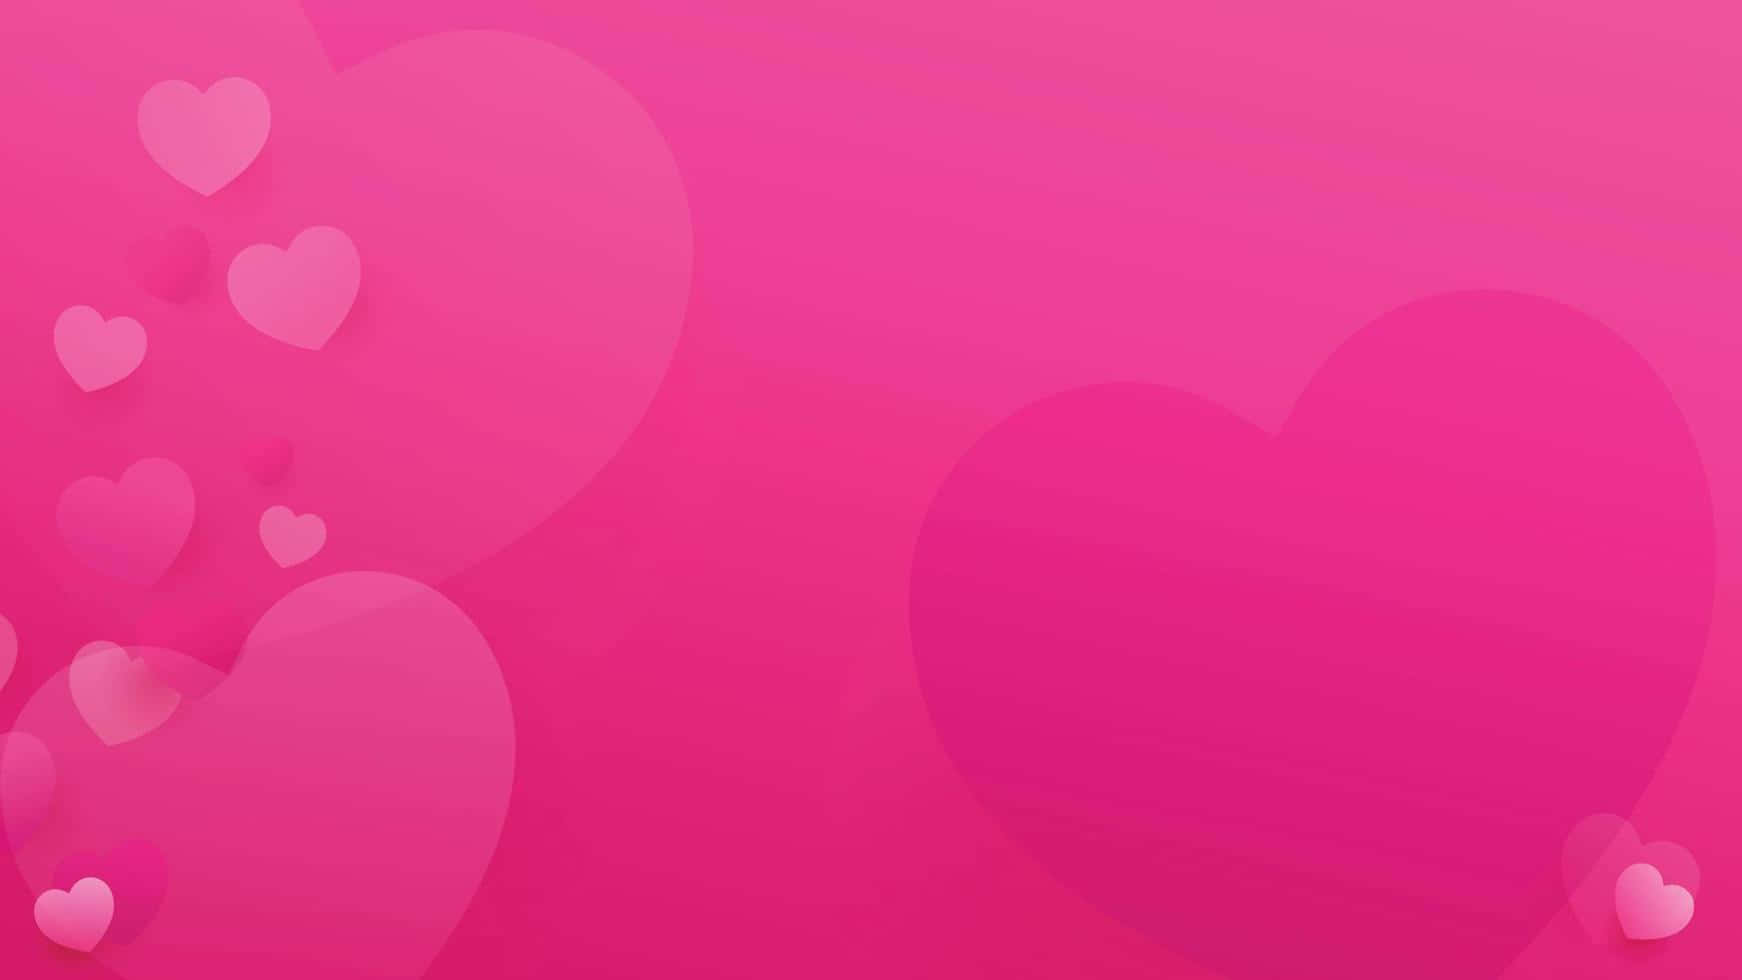 Pink Hearts Gradient Background.jpg Wallpaper